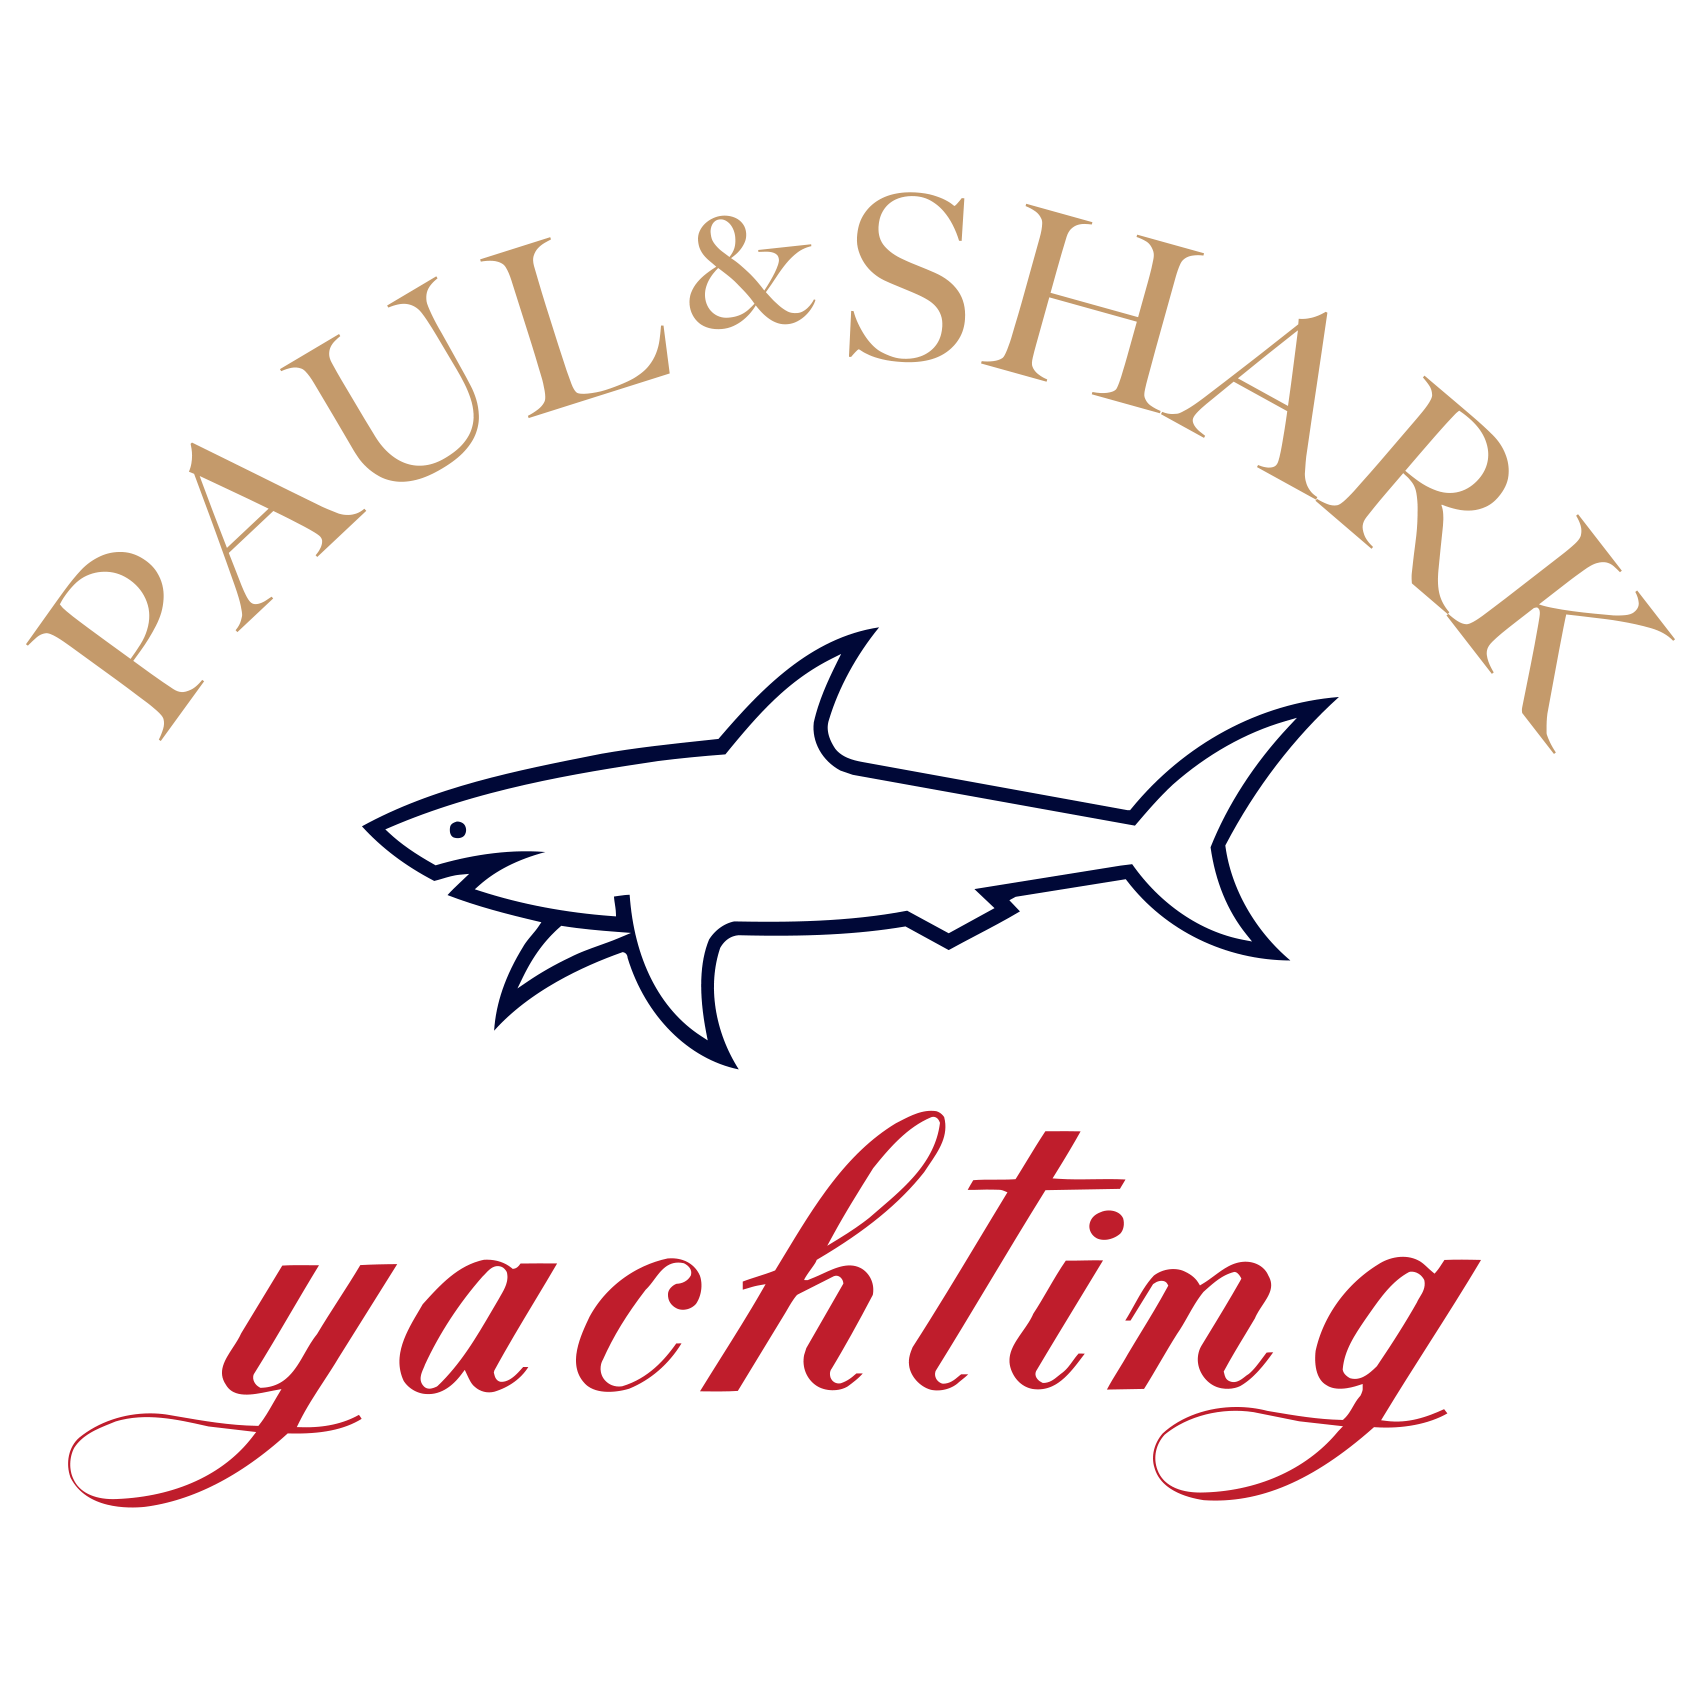 paul & Shark yachting logo